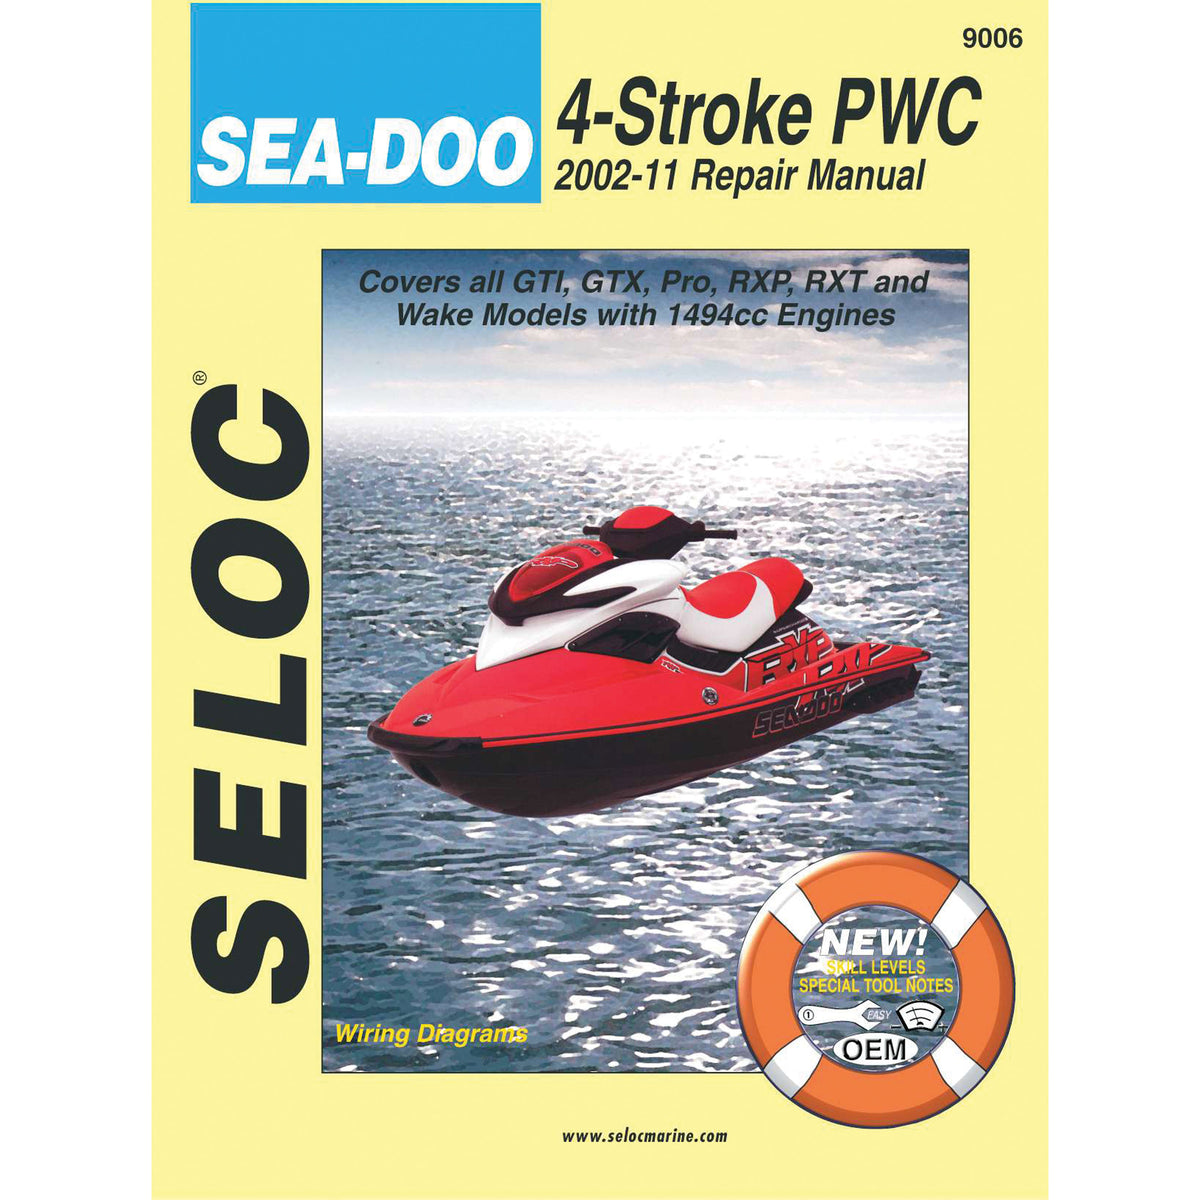 Sierra 18-09006 Seloc Repair Manual for Sea-Doo/Bombardier Personal Watercraft - All 4-Stroke 2002-2011